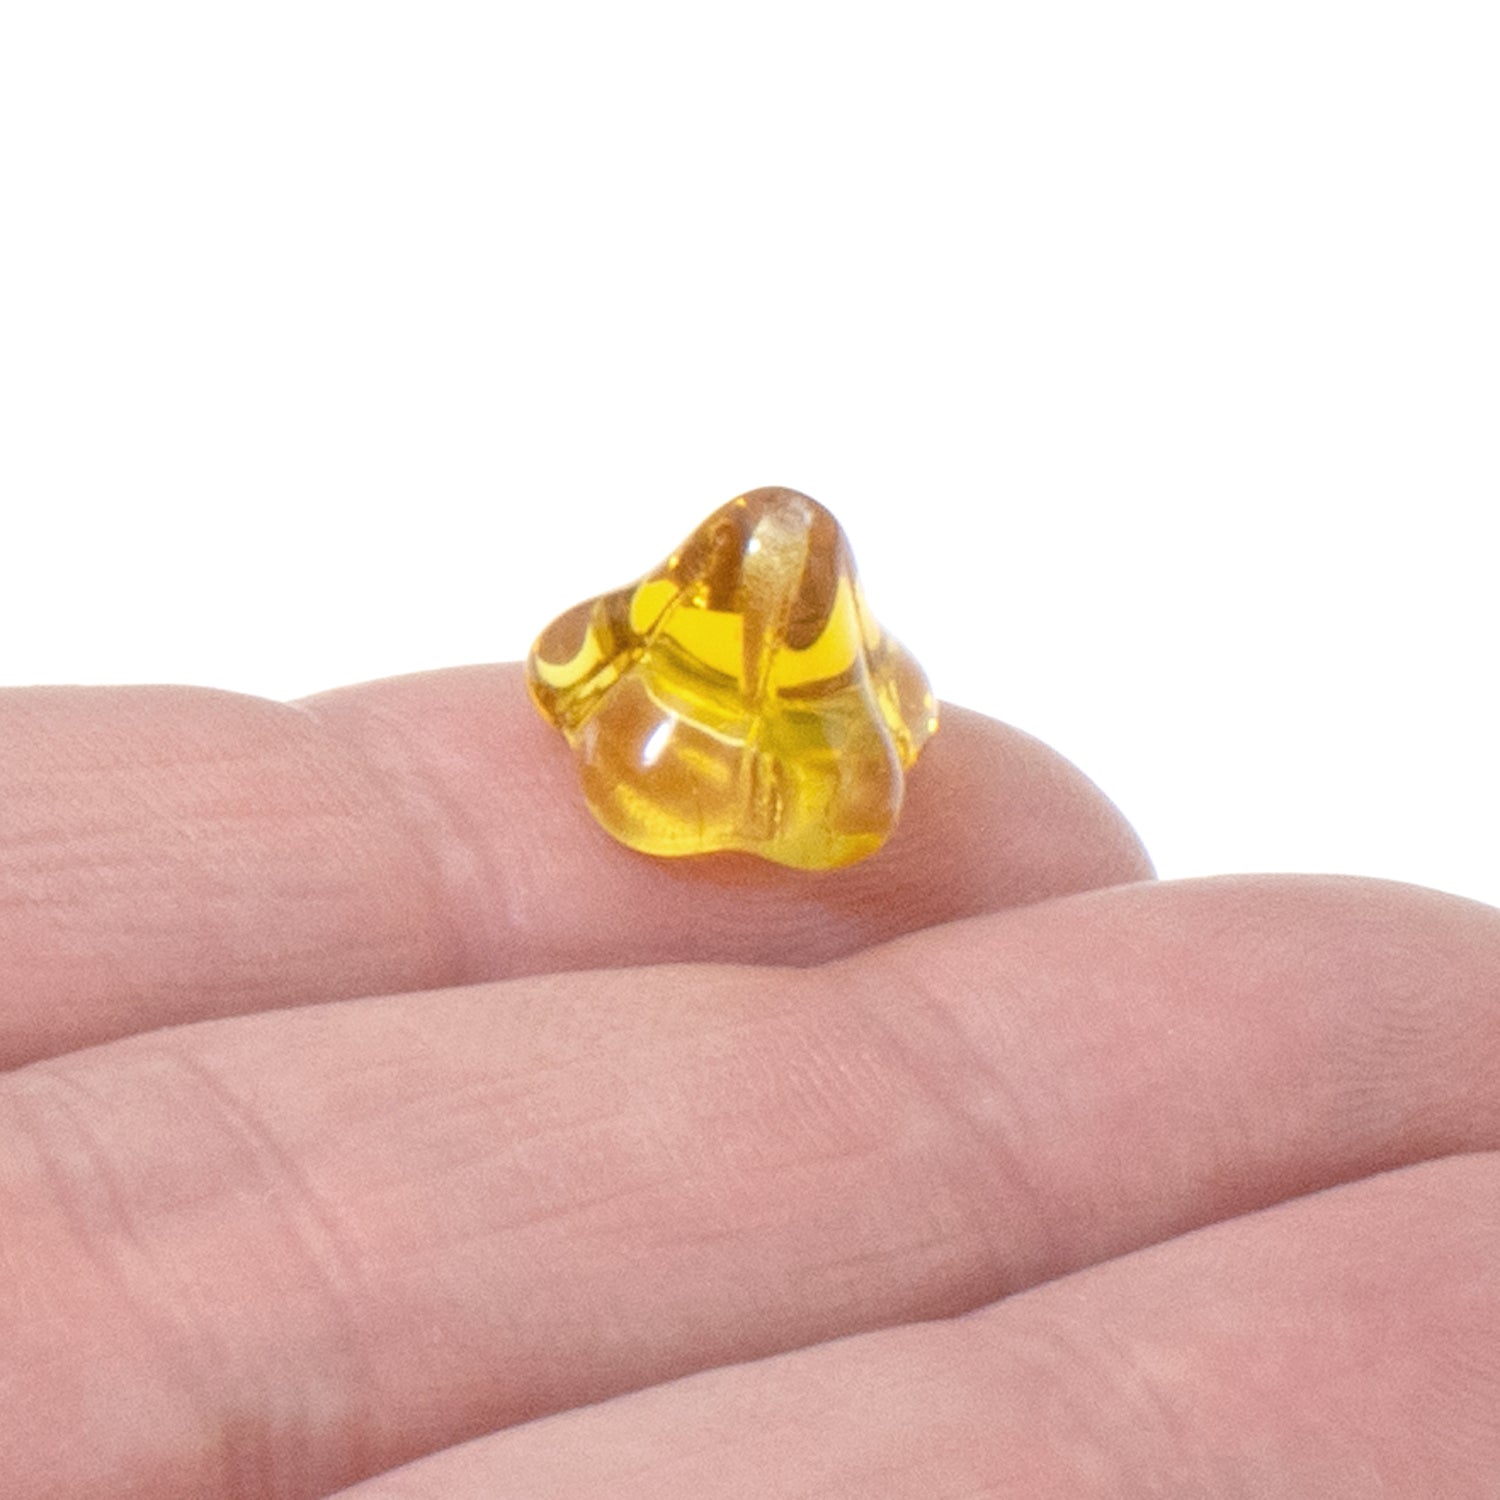 20mm Large yellow Czech glass flower beads, 6Pc – MayaHoney beads